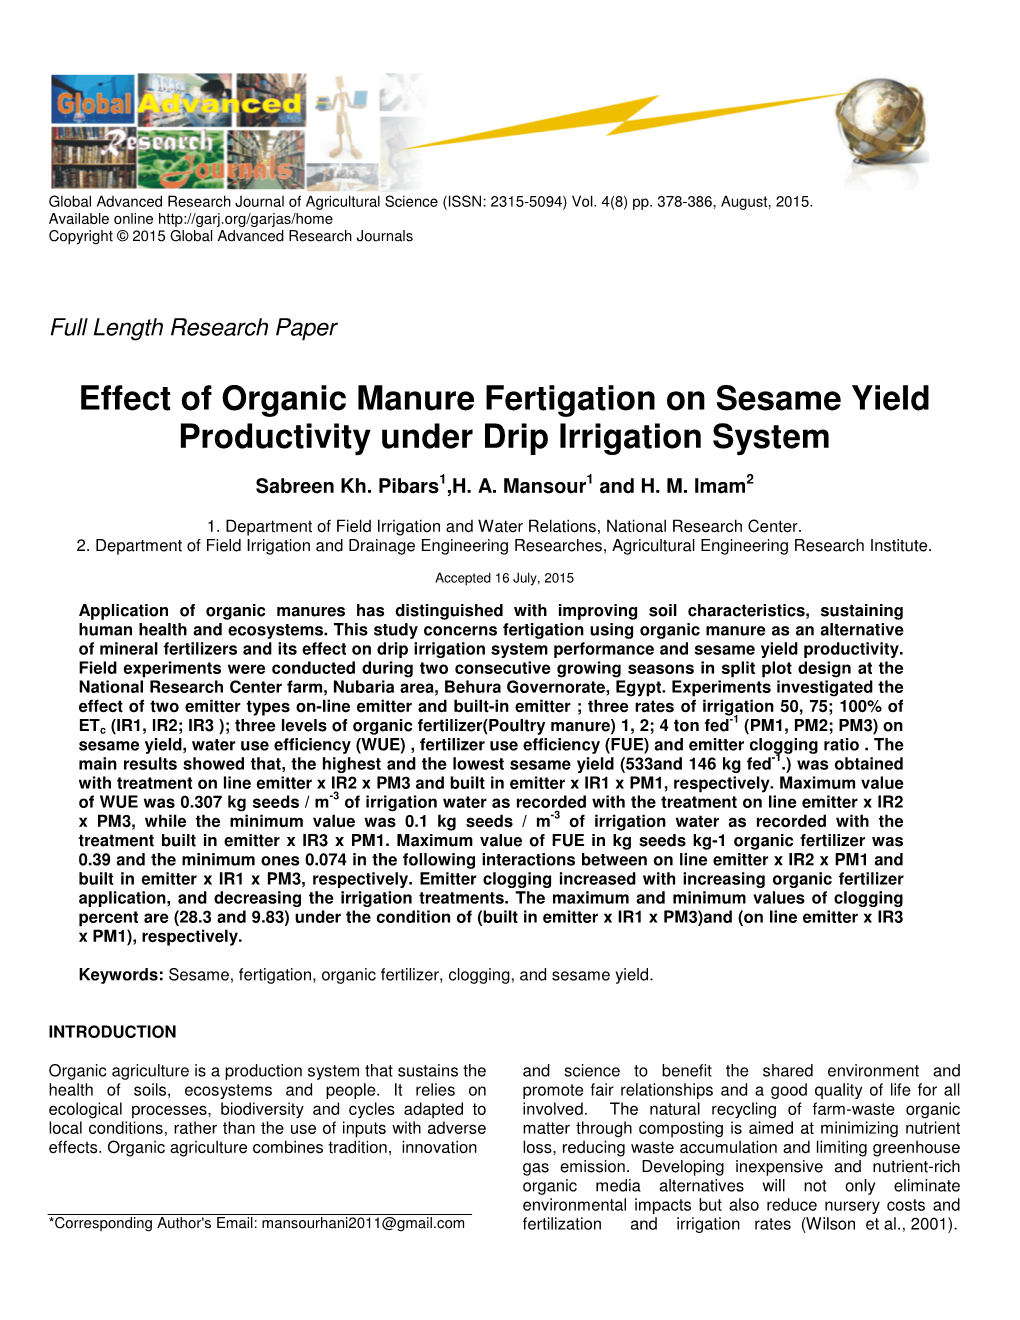 Effect of Organic Manure Fertigation on Sesame Yield Productivity Under Drip Irrigation System